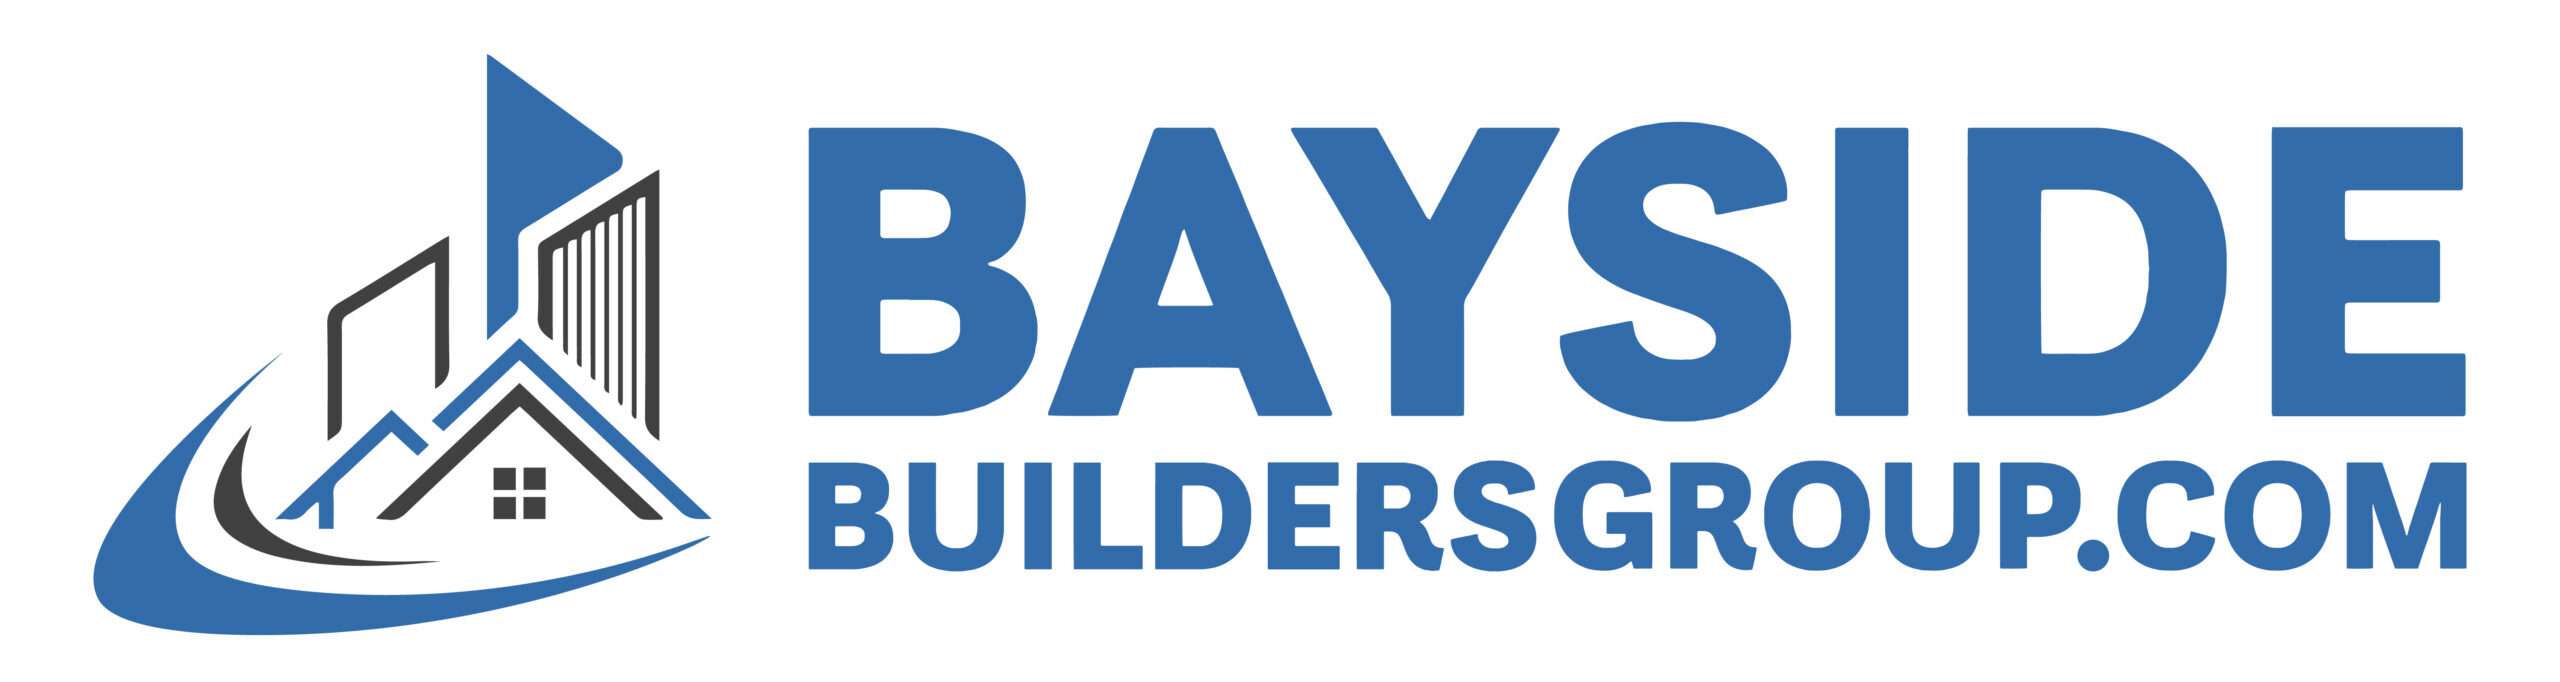 bayside-logo